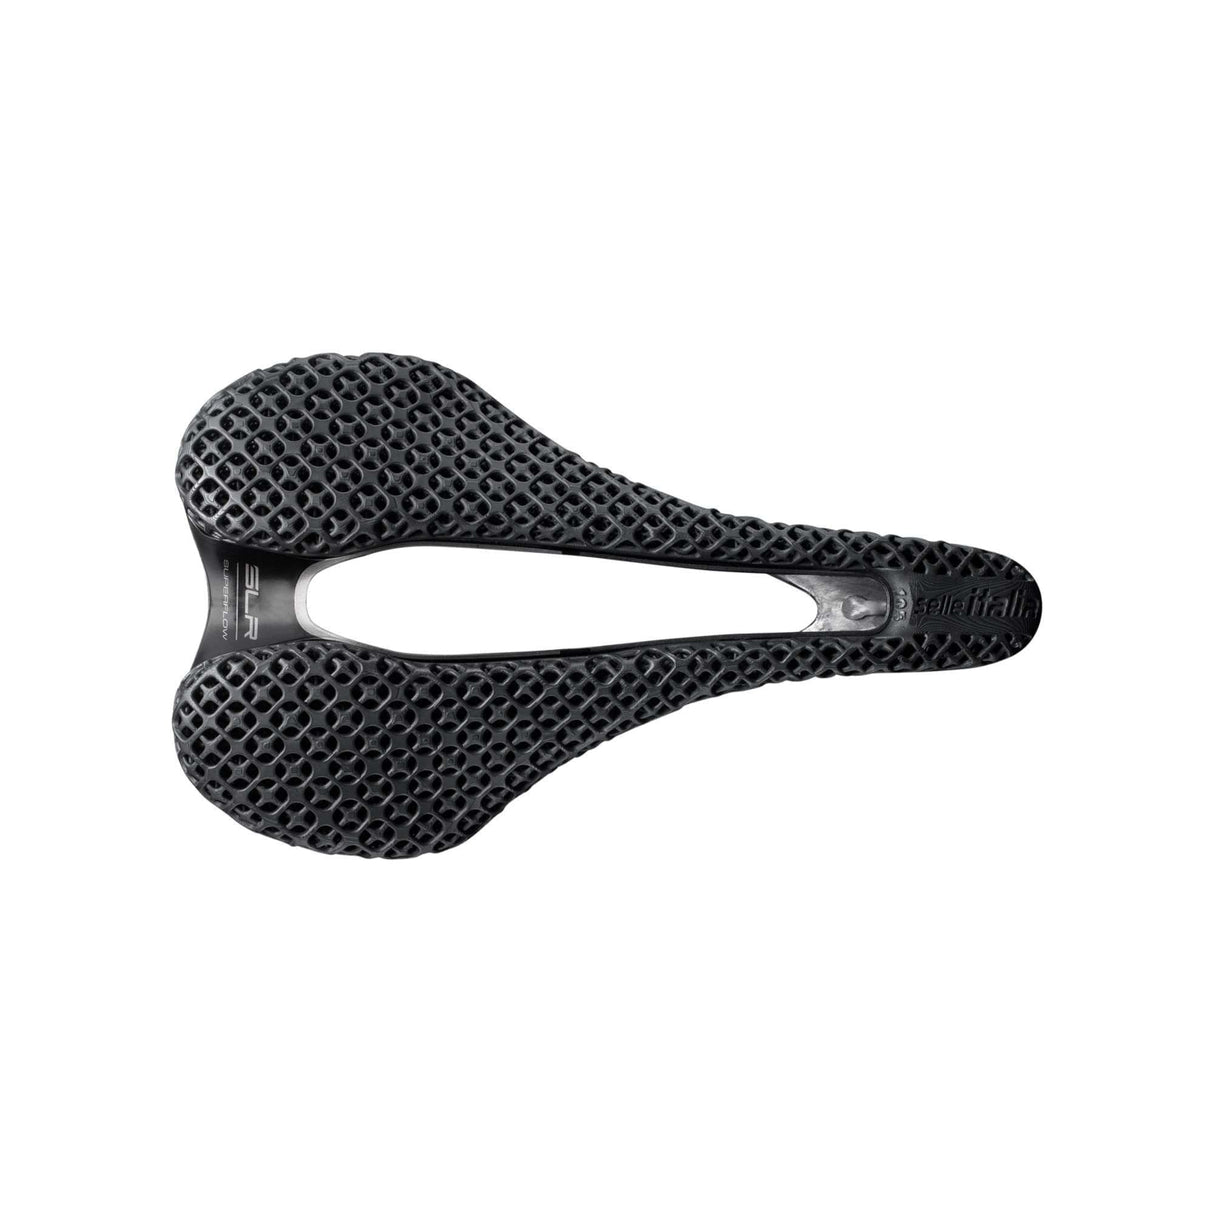 Selle Italia Slr Boost 3D Kit Carbonio Superflow Saddle: Black/Black S3